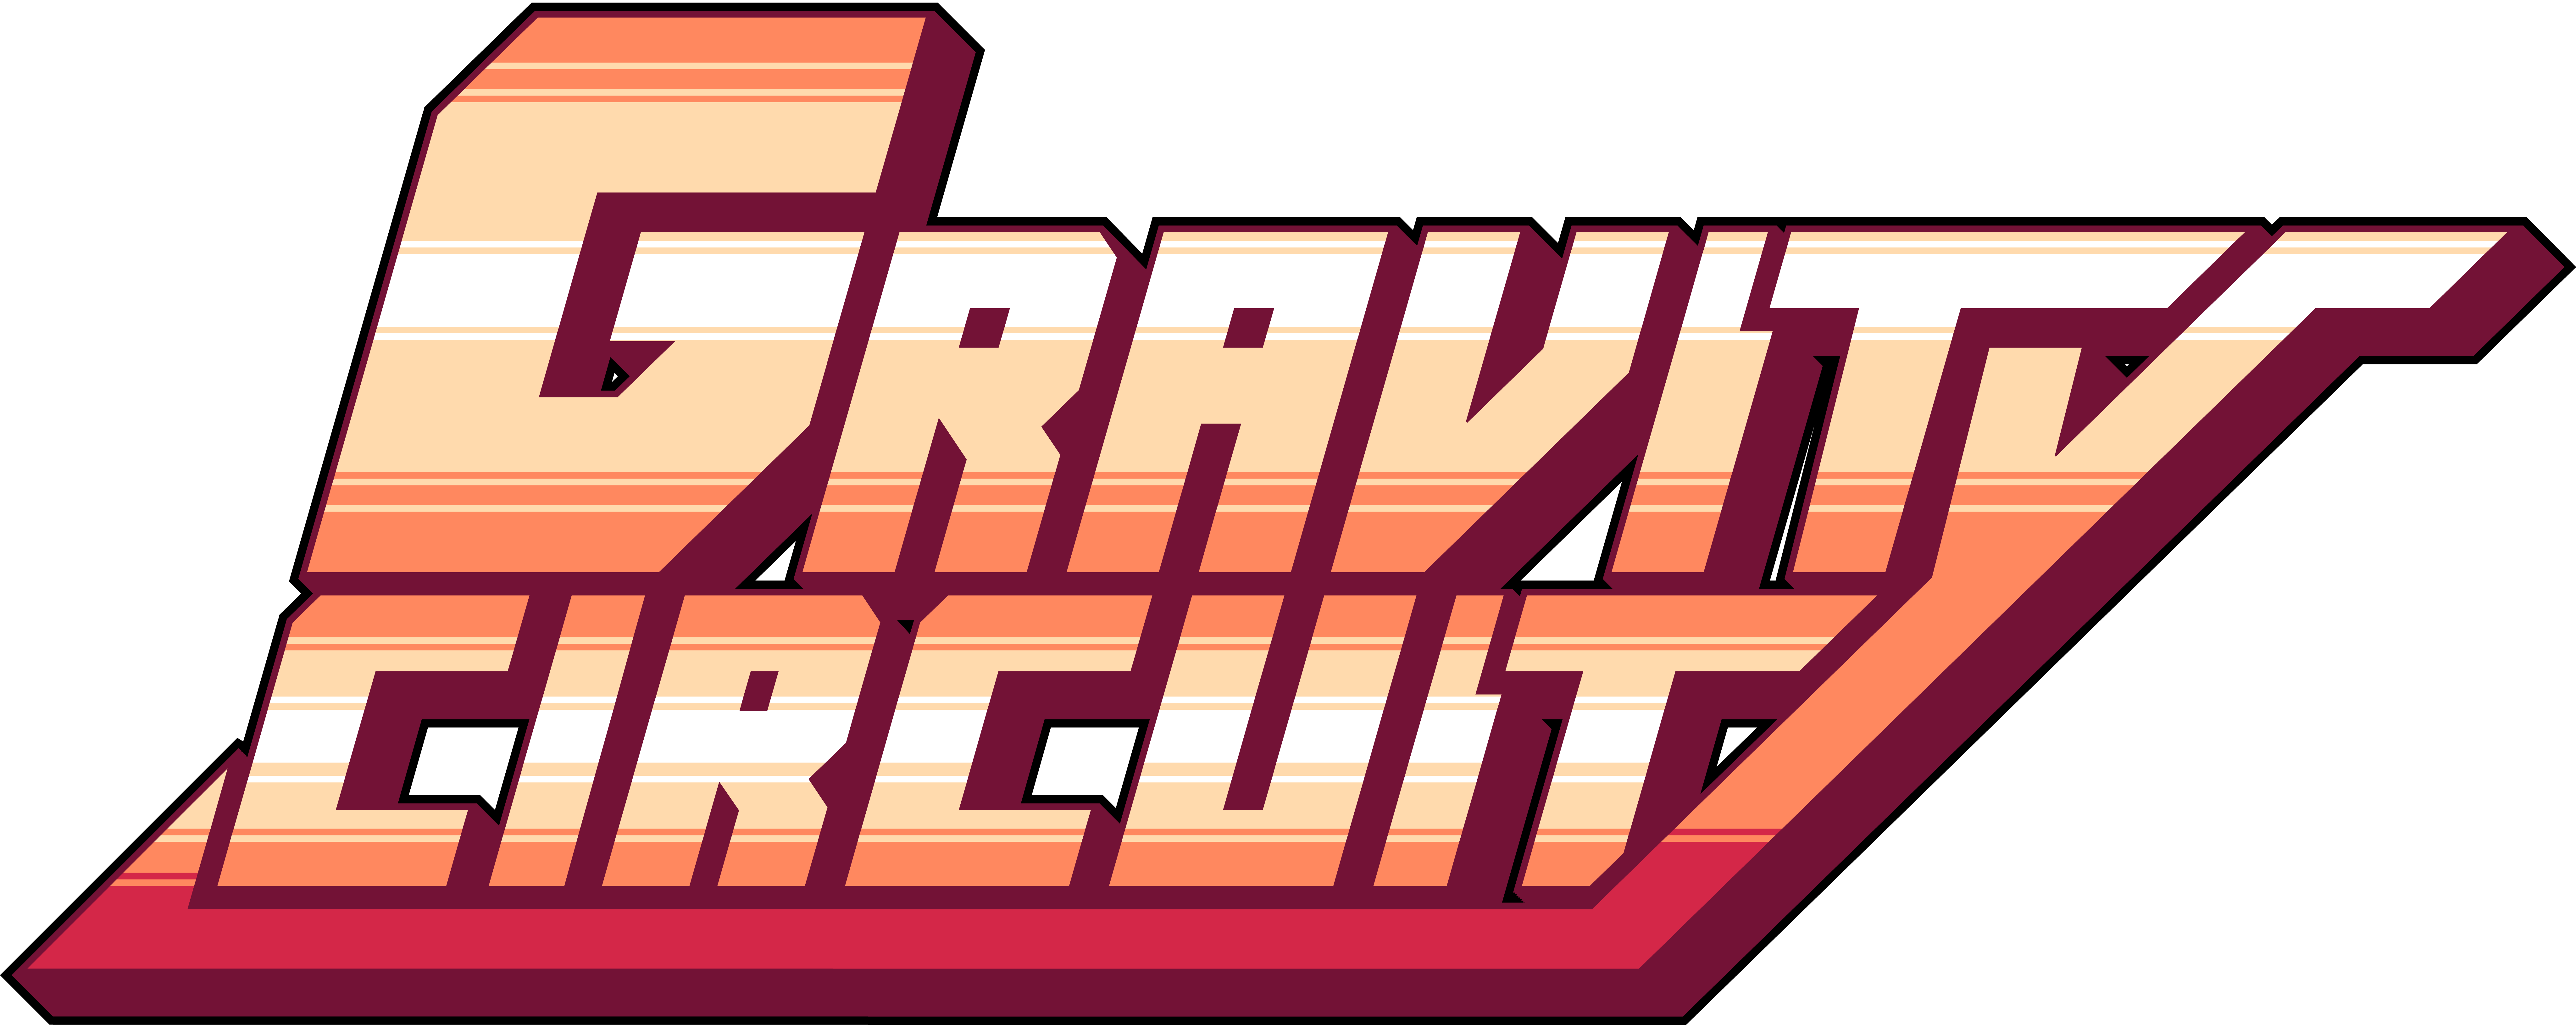 gravity circuit logo